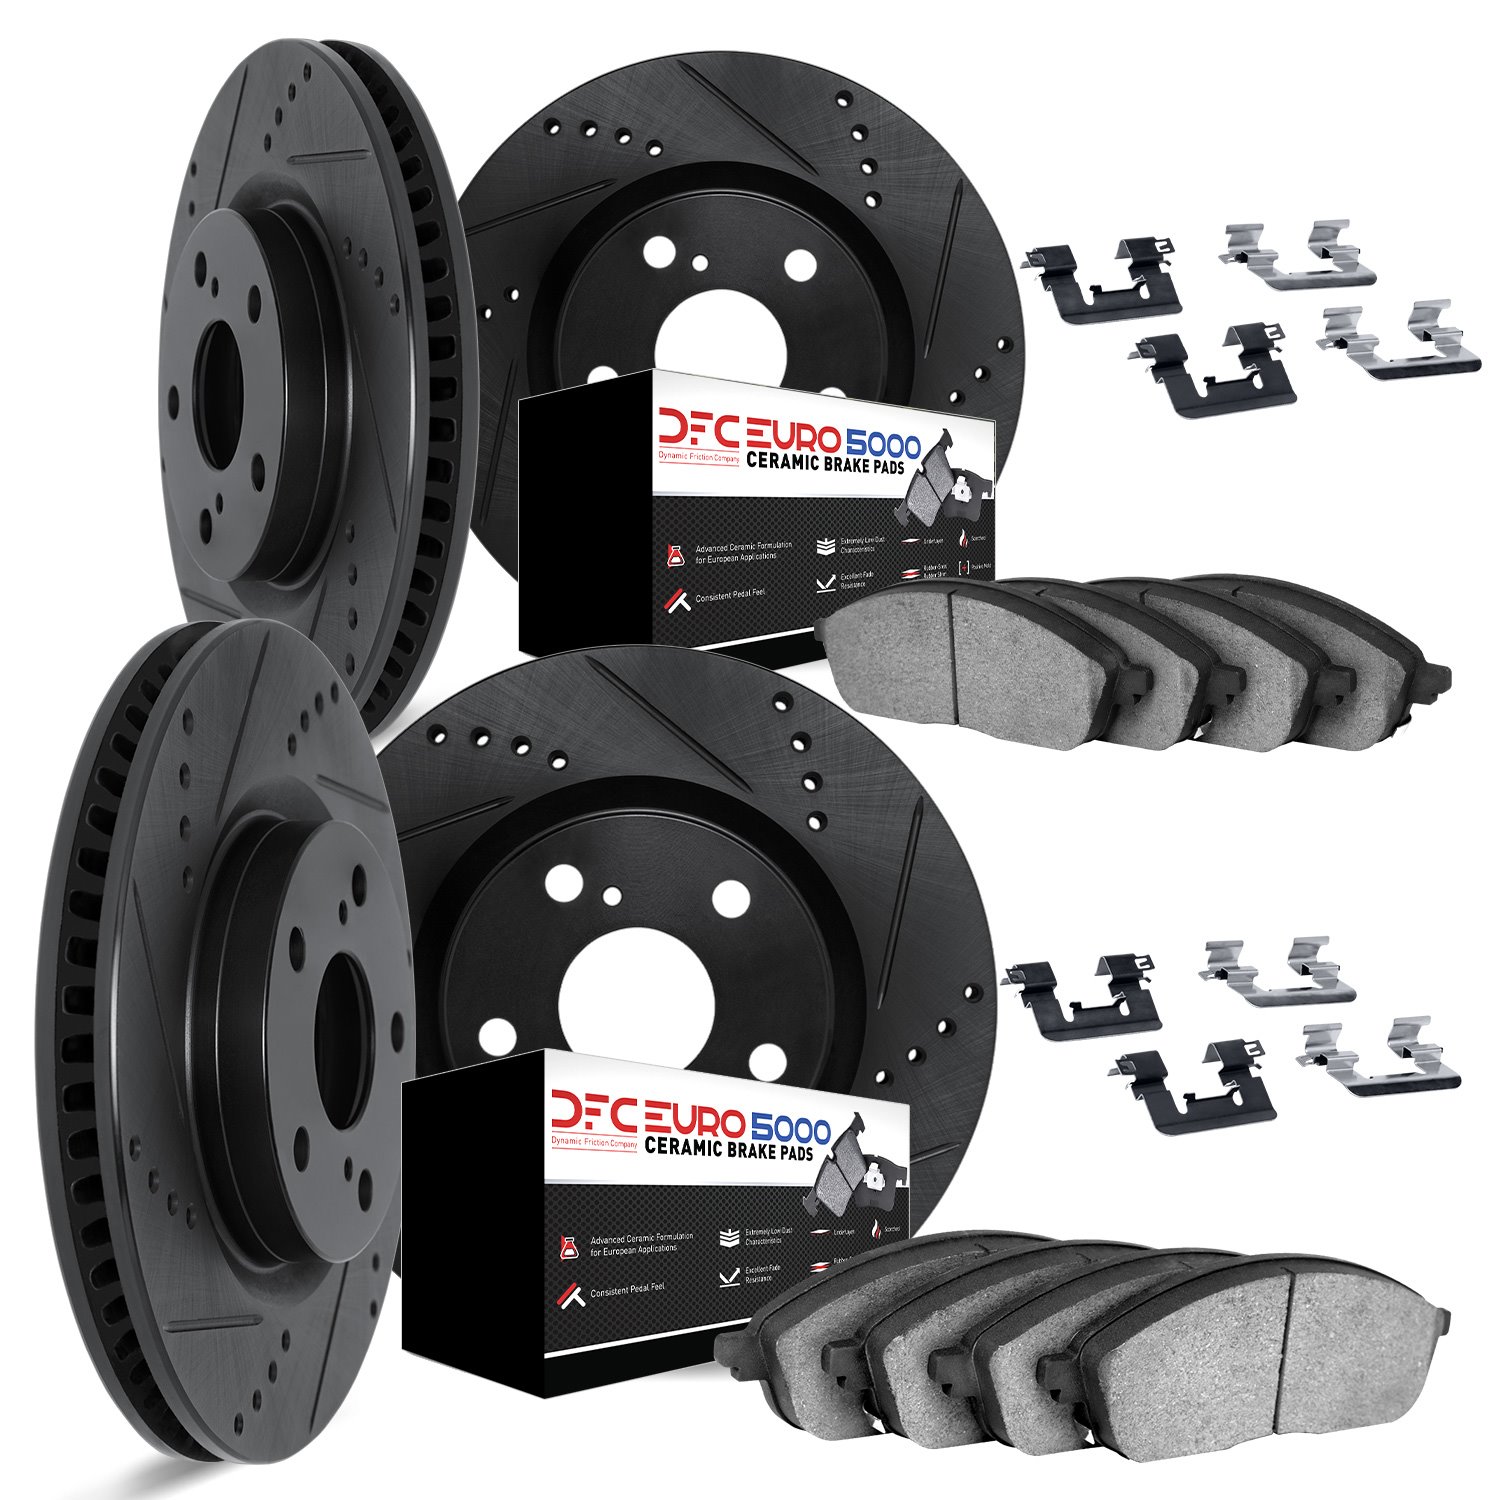 8614-31035 Drilled/Slotted Brake Rotors w/5000 Euro Ceramic Brake Pads Kit & Hardware [Black], Fits Select BMW, Position: Front